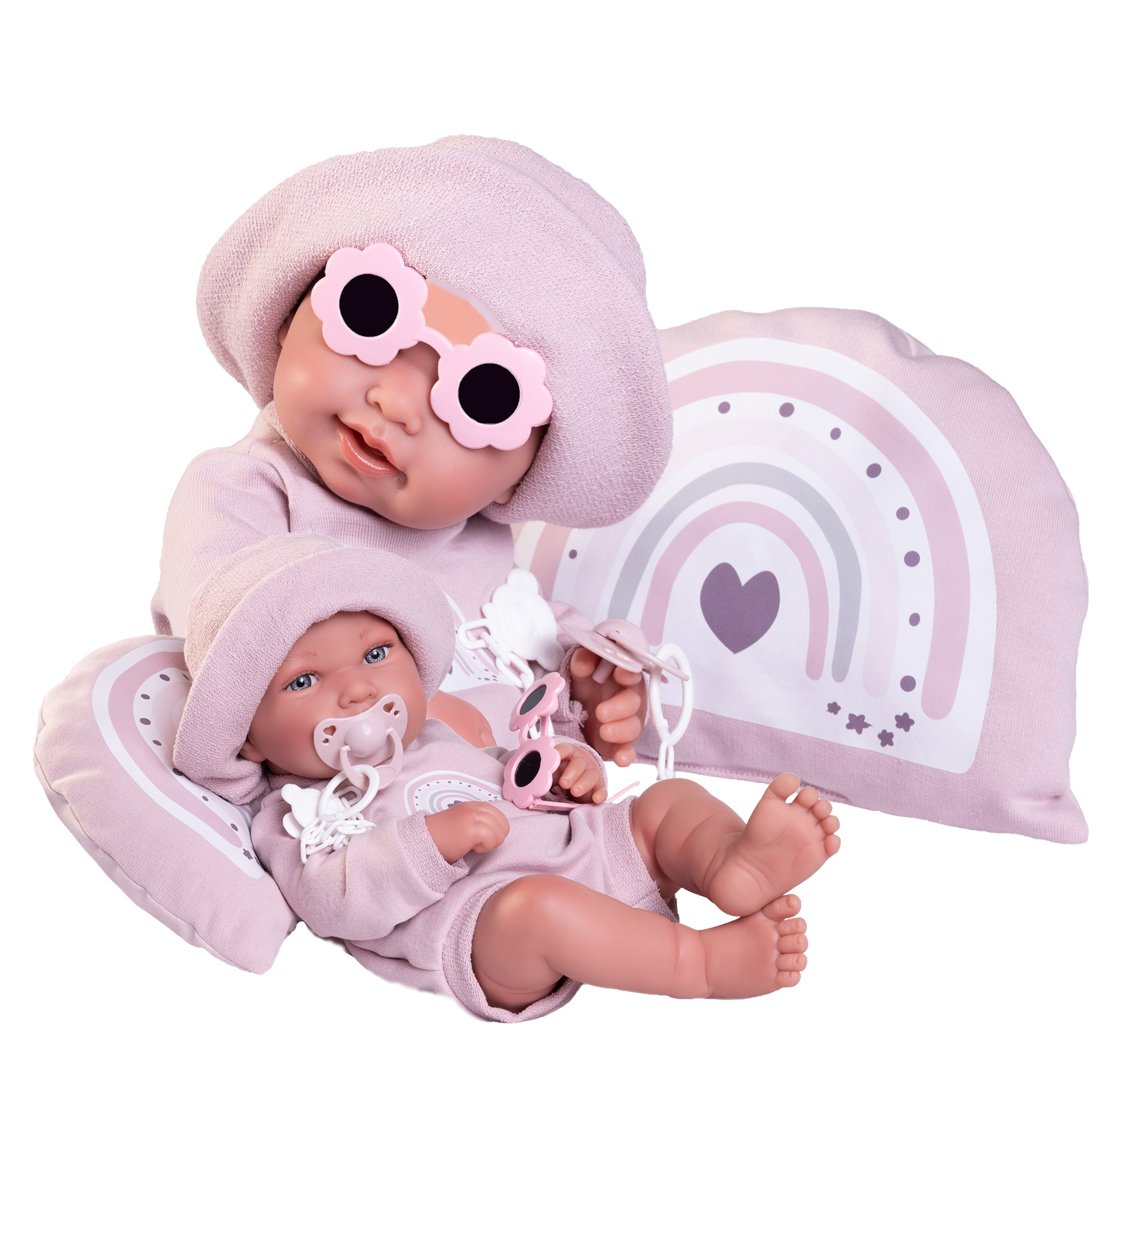 Levně Antonio Juan 50400 PIPA - realistická panenka miminko s celovinylovým tělem - 42 cm